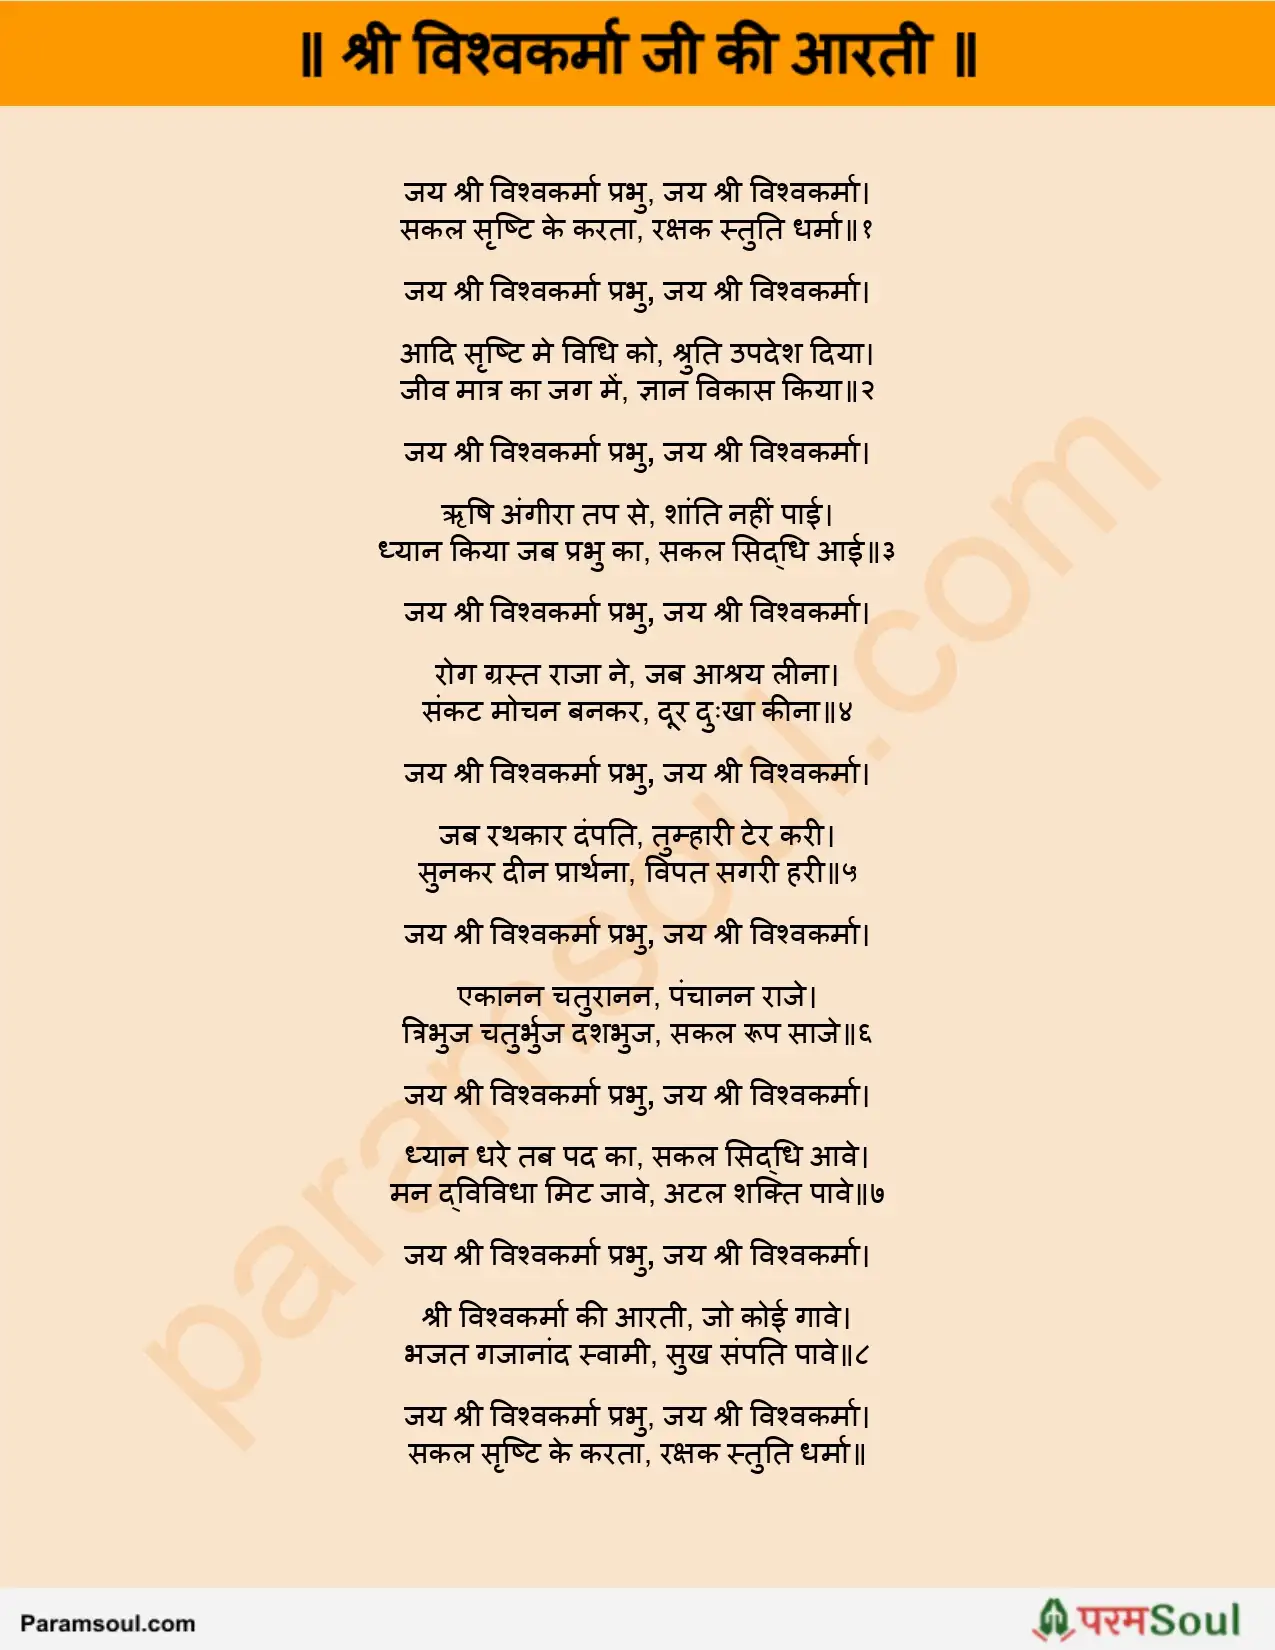 Sri Vishwakarma Aarti Hindi Lyrics - श्री विश्वकर्मा जी की आरती